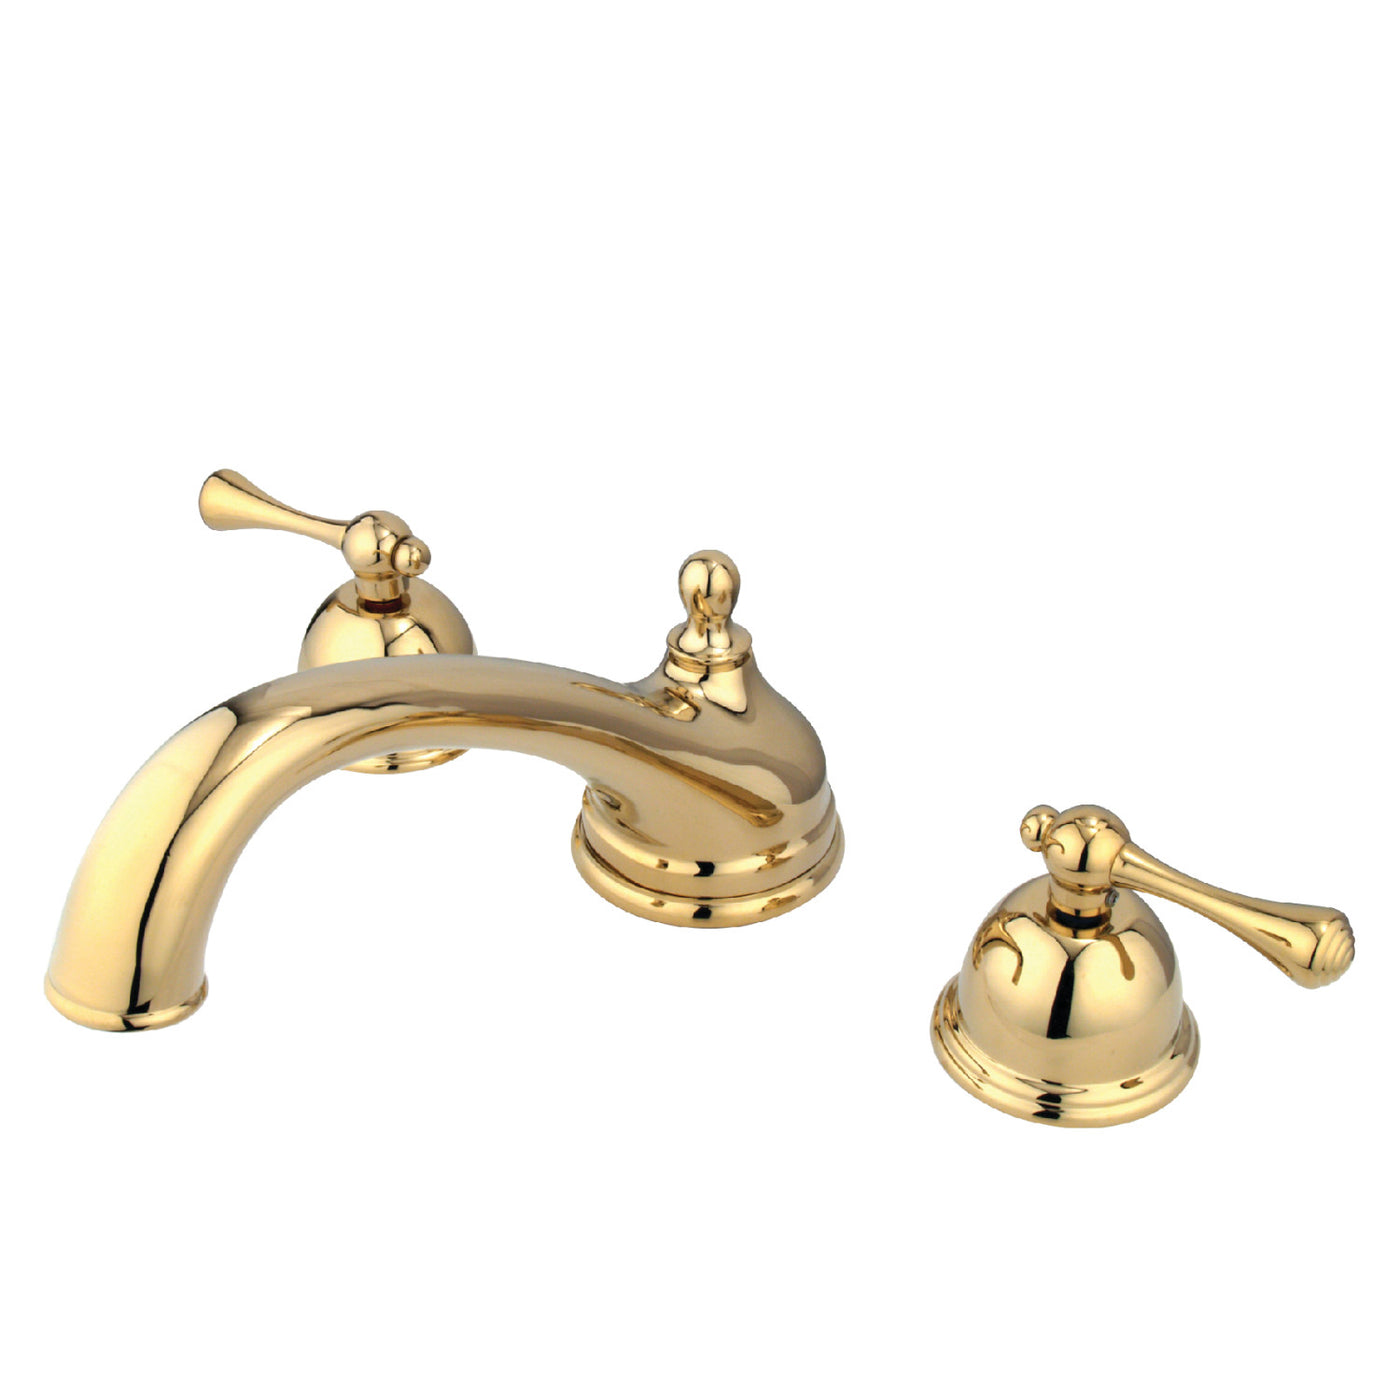 Elements of Design ES3352BL Roman Tub Faucet, Polished Brass